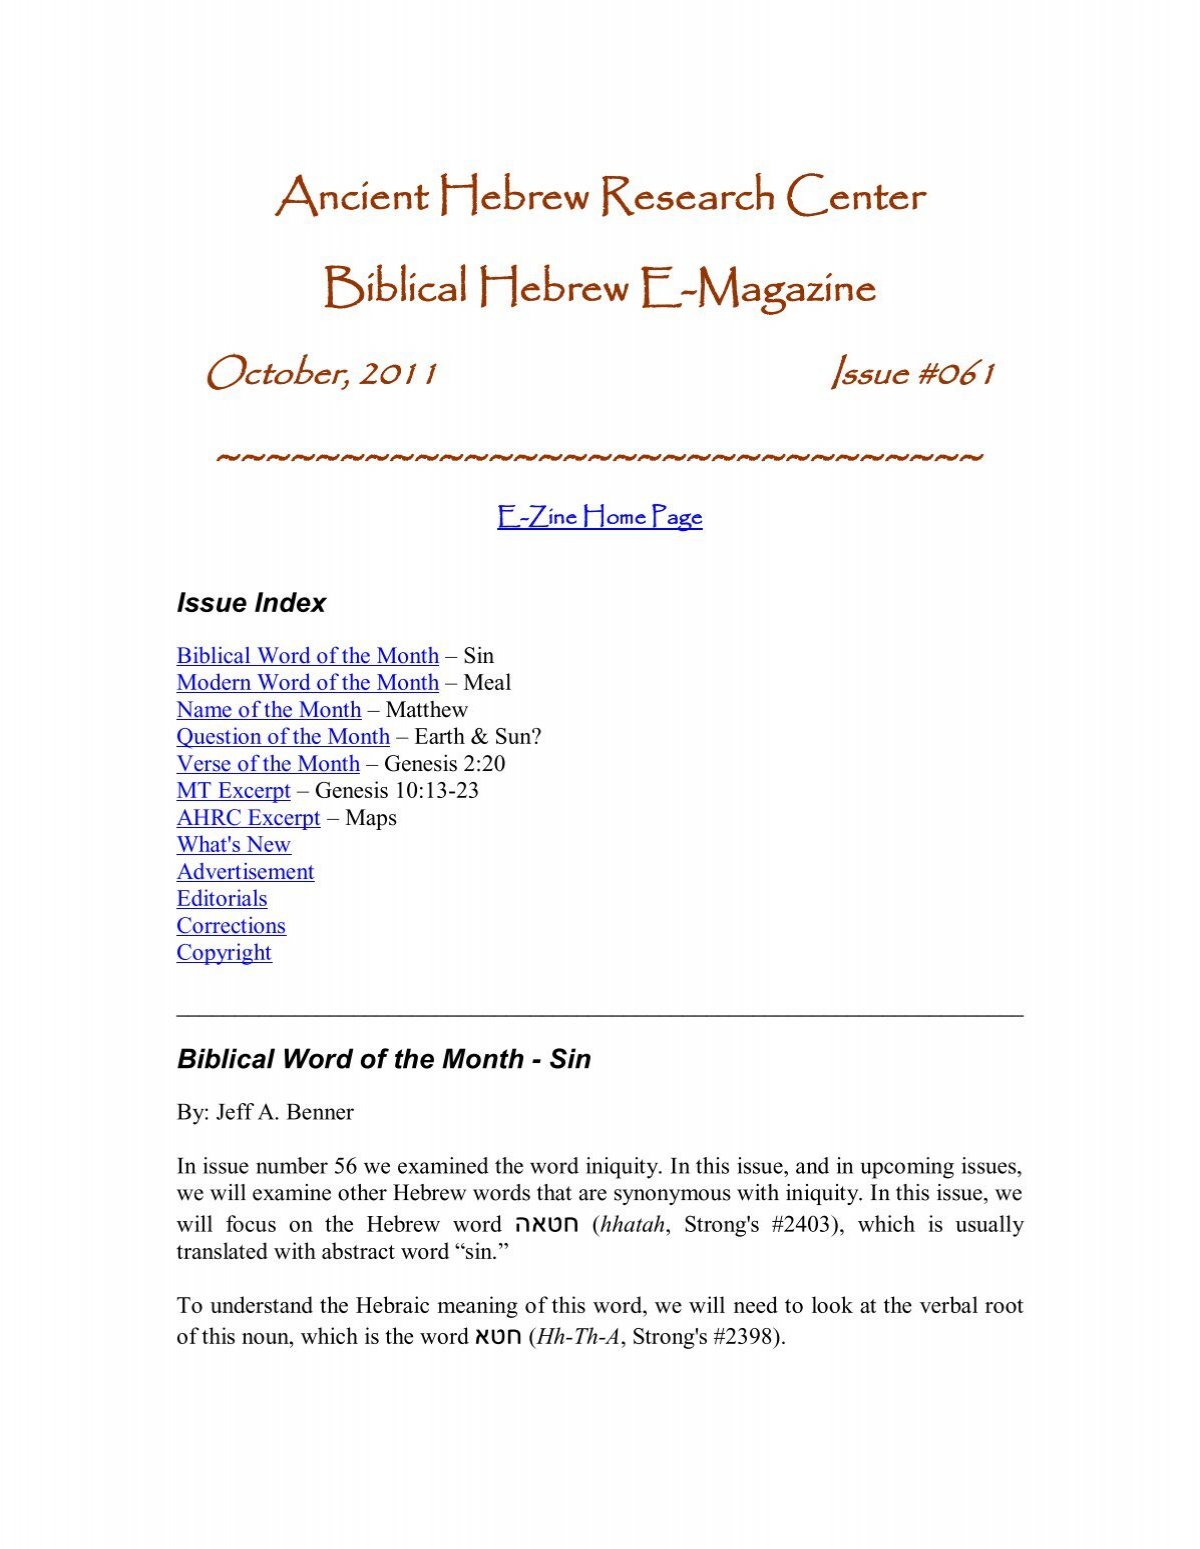 biblical-hebrew-e-magazine-ancient-hebrew-research-center